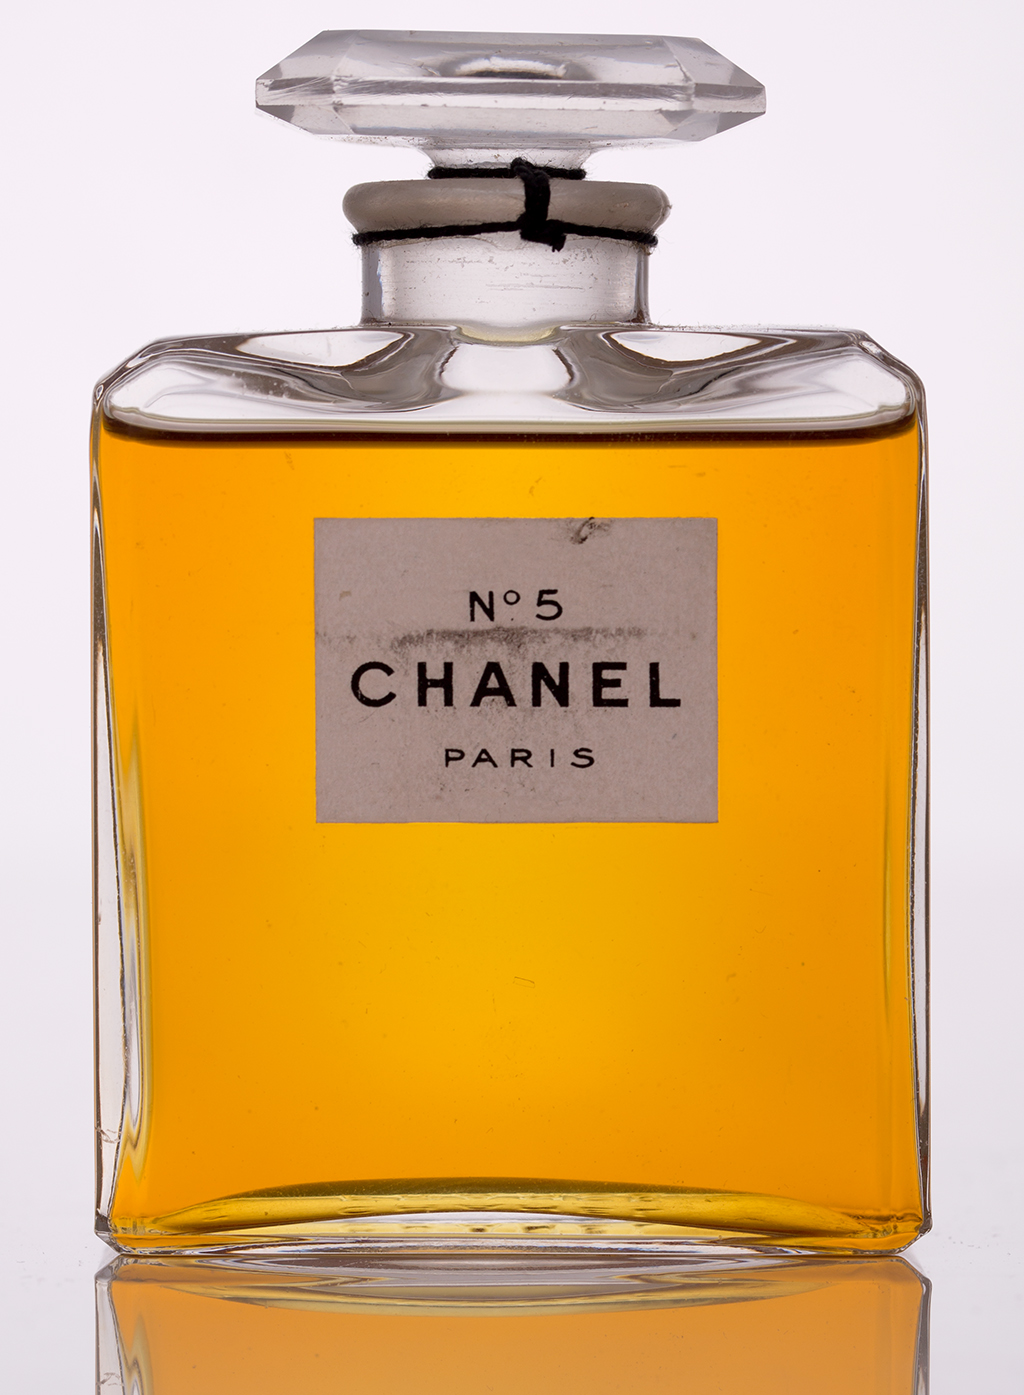 Chanel perfume bottle | The Małopolska Virtual Museums